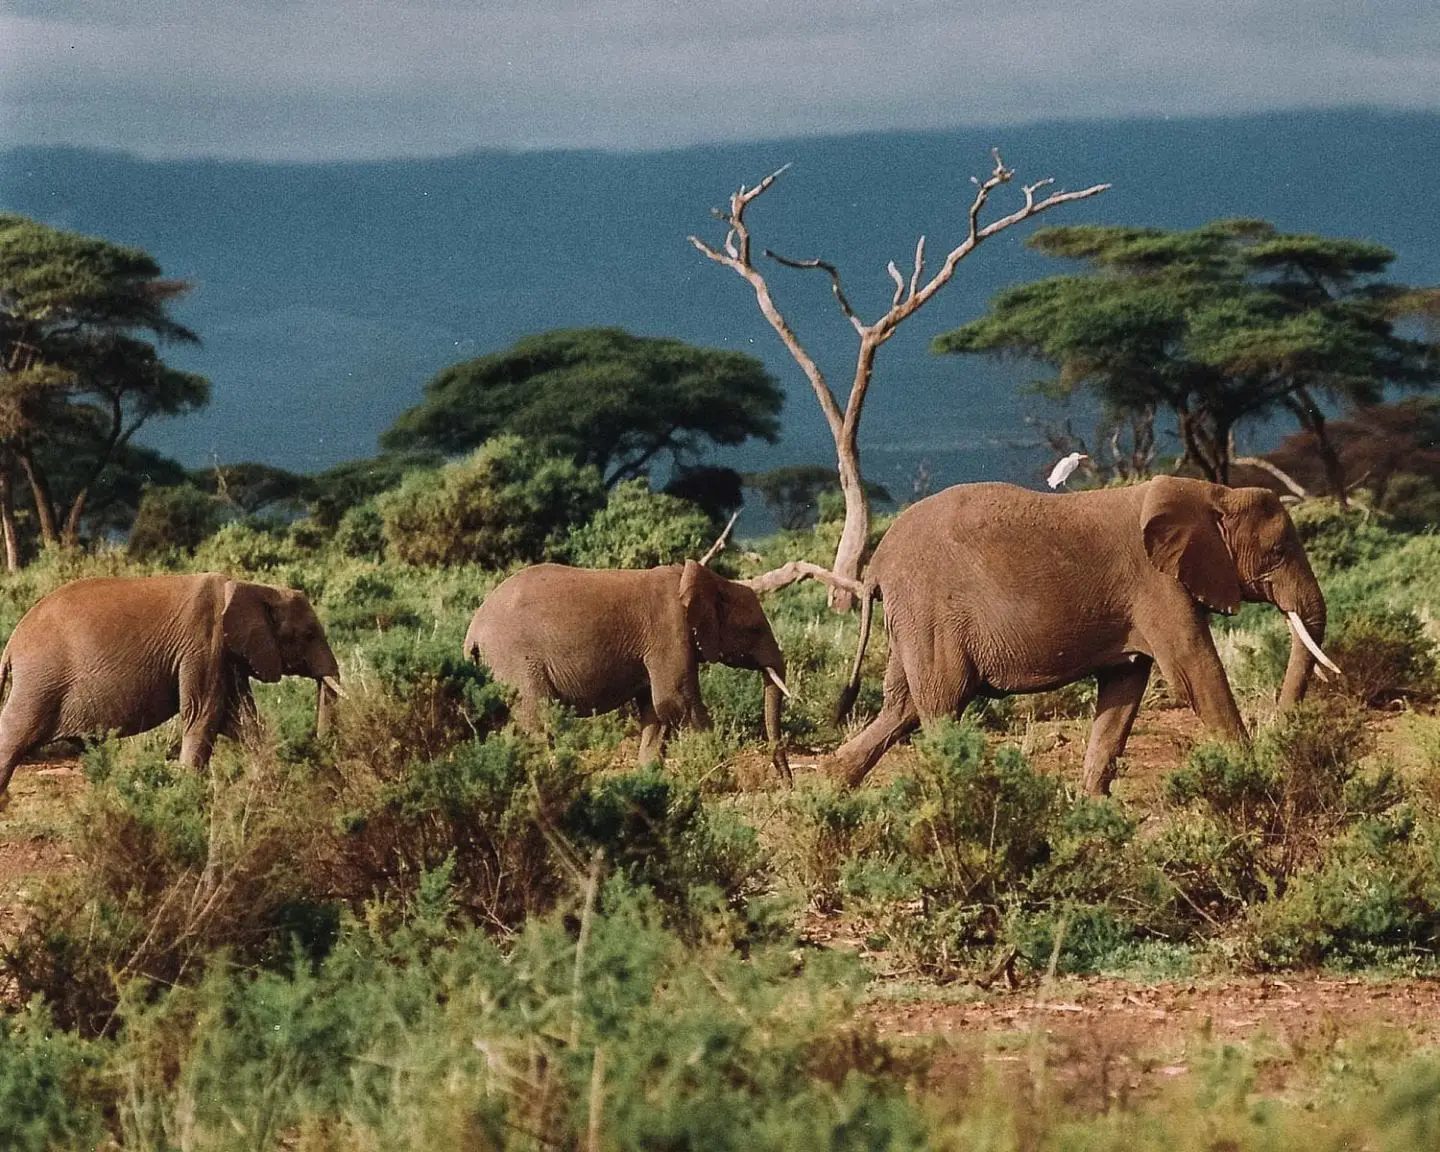 elephants walking in Shimba Hills National Reserve